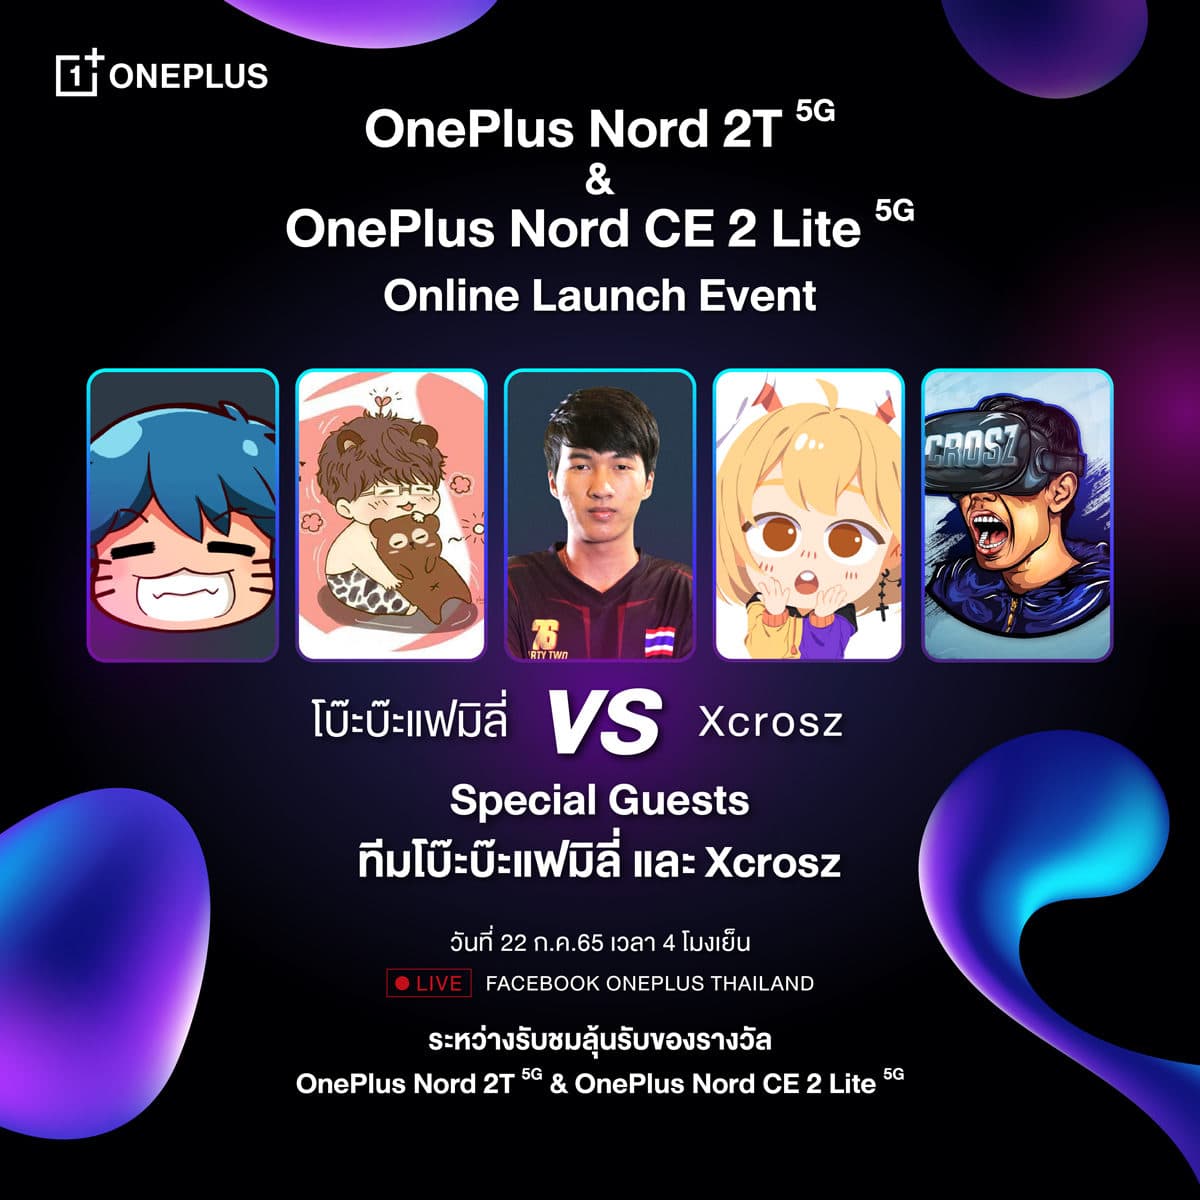 OnePlus Nord 2T 5G และ OnePlus Nord CE 2 Lite 5G เปิดตัว ในไทย 22 ก.ค.นี้